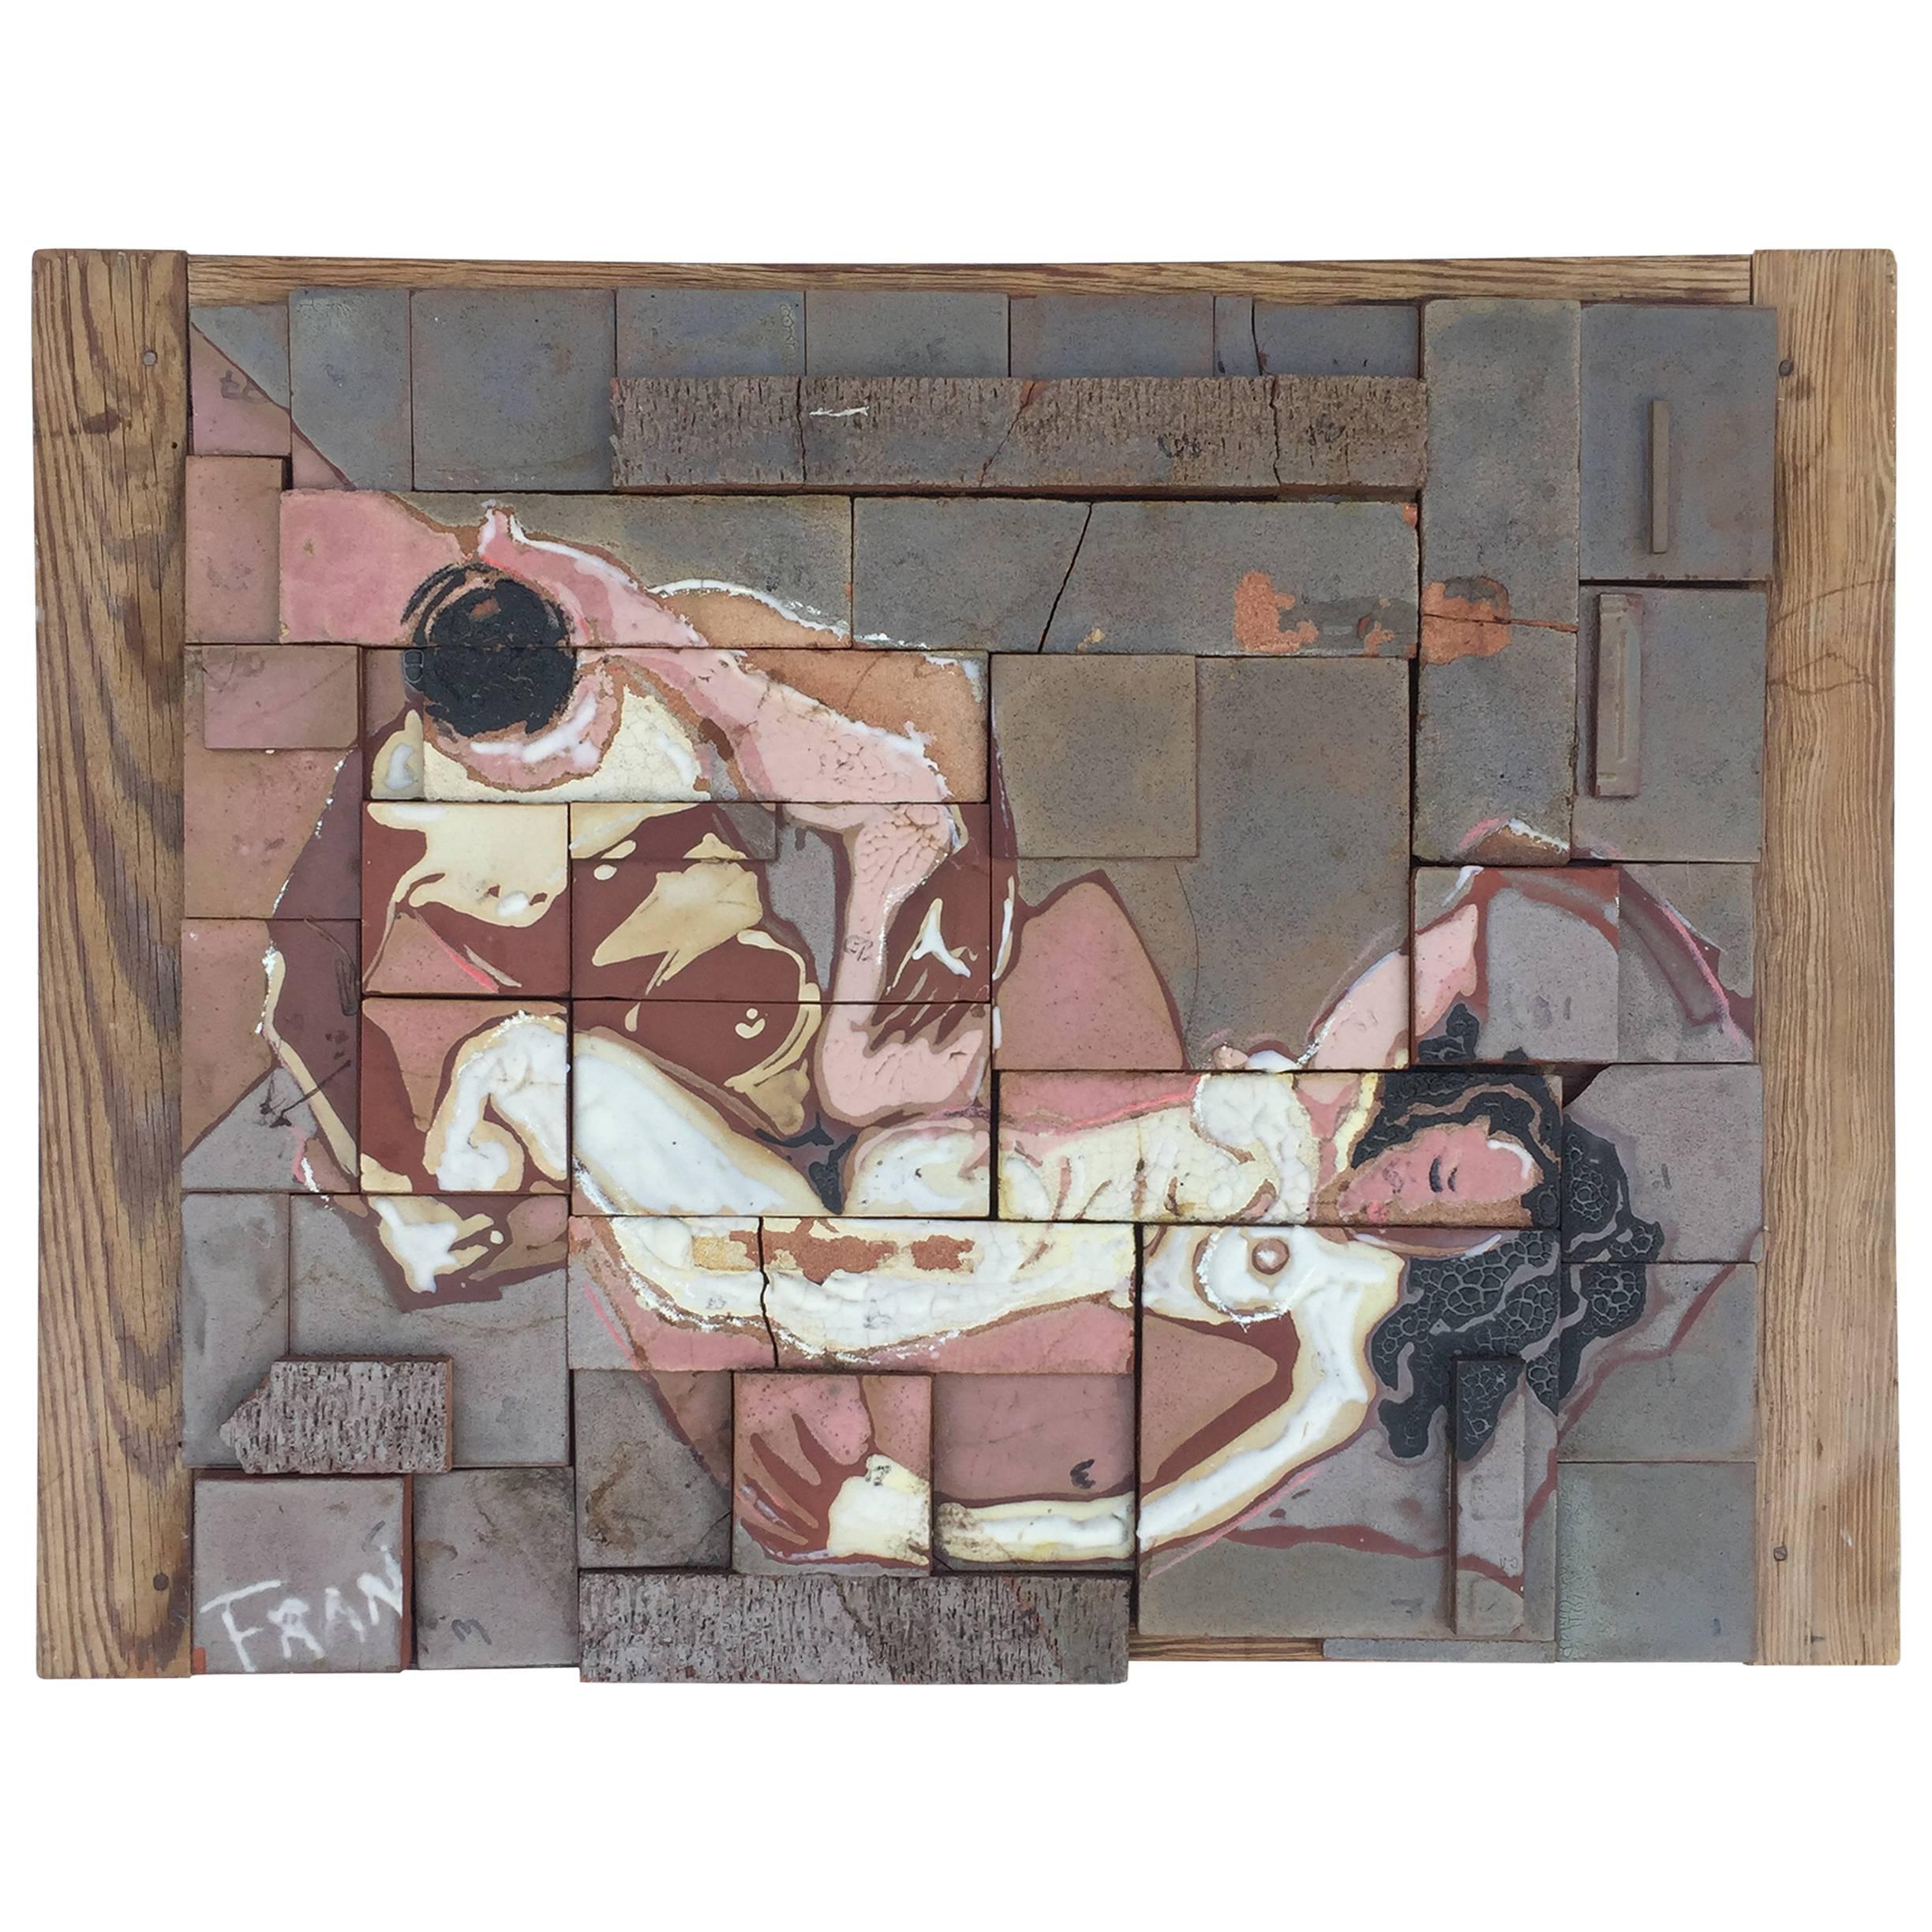 Fran Williams Wagner 3 Dimensional Erotica Tile Art For Sale